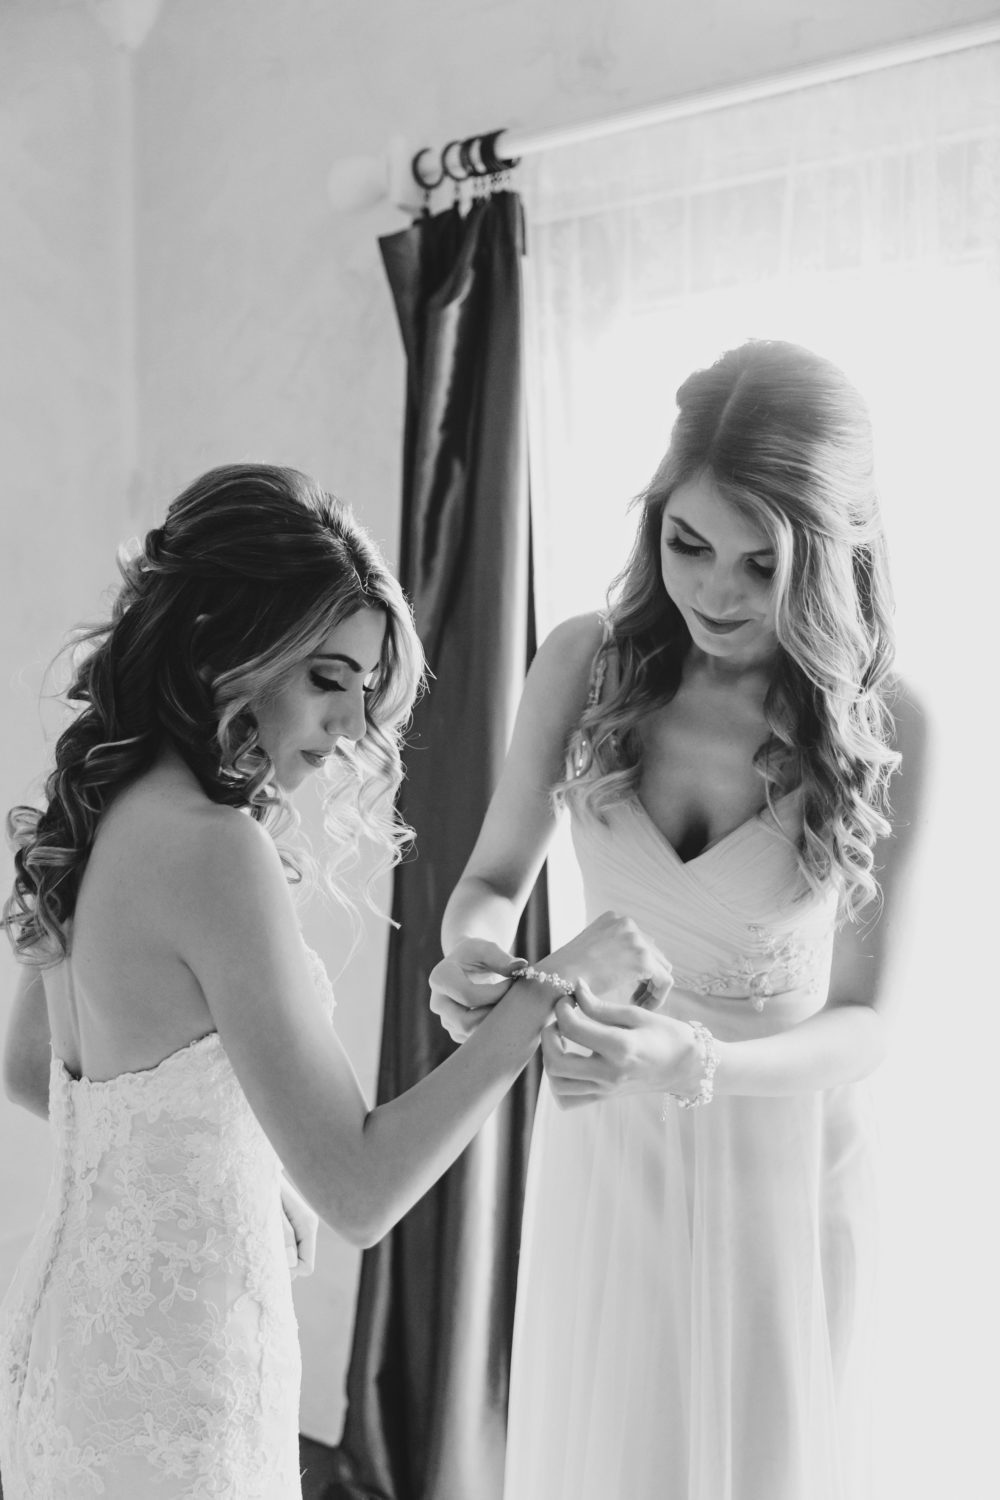 Amanda & Michael's Wedding | Julie Wilhite Photography | Austin Wedding Photographer | via juliewilhite.com